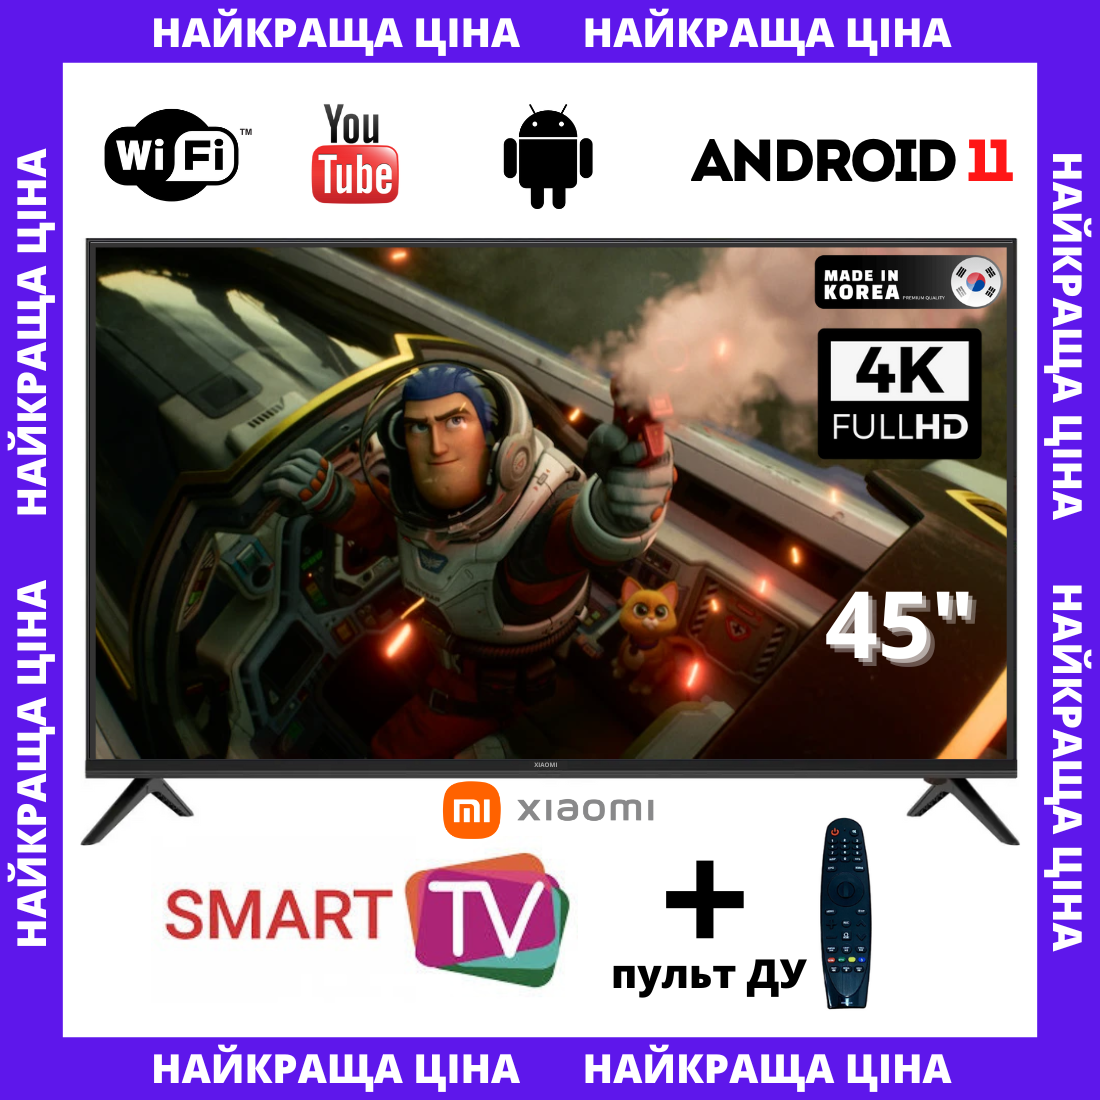 Телевізор смарт Xiaomi 45" FullHD SmartTV Android 13.0 WiFi Т2 + пульт ДУ